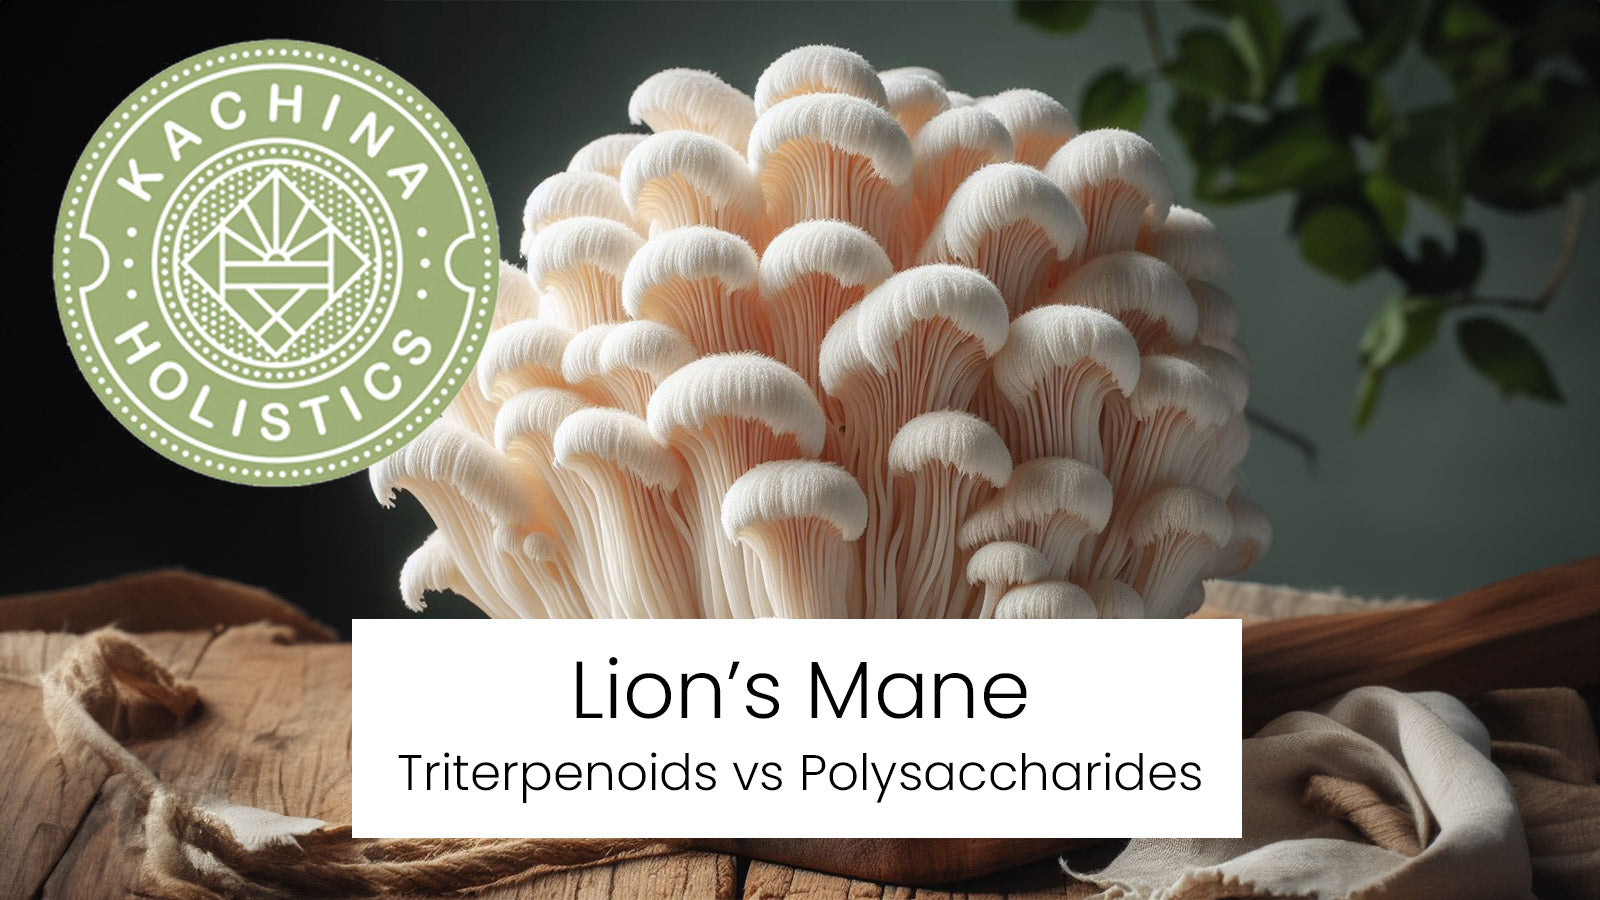 Lion's Mane: Triterpenoids vs Polysaccharides